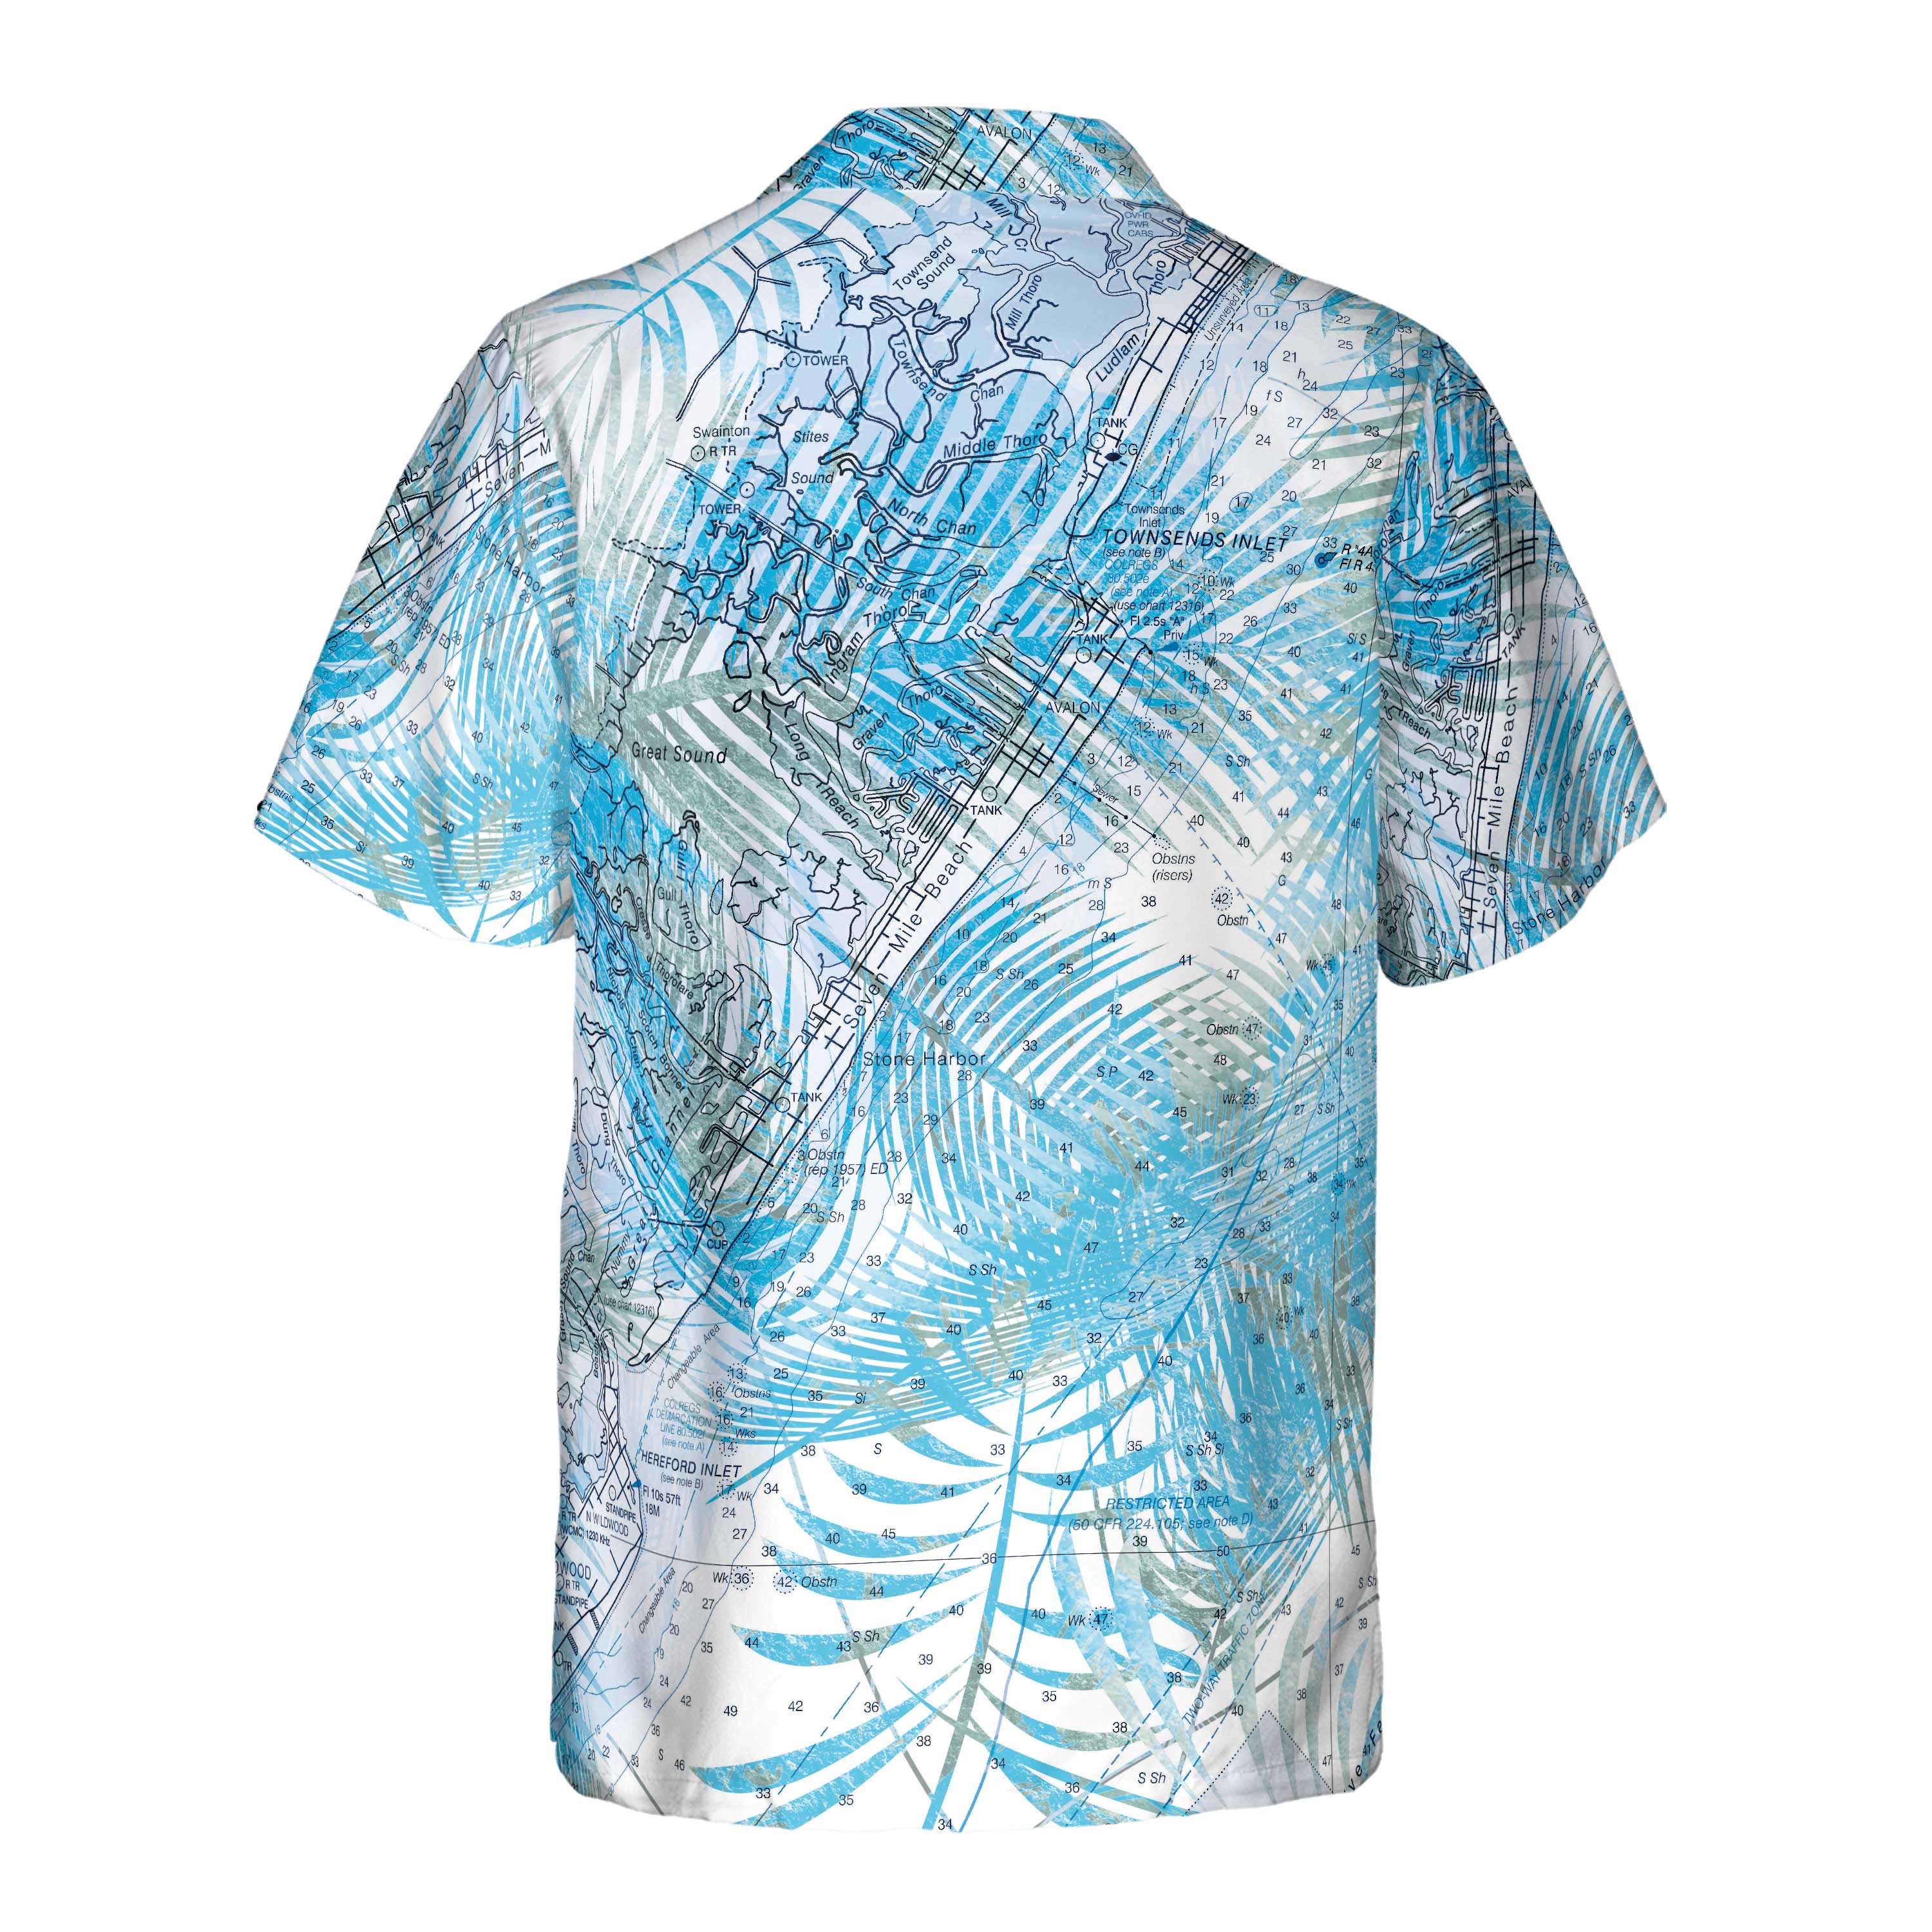 The Seven Mile Beach Tropical Blue Pocket Shirt